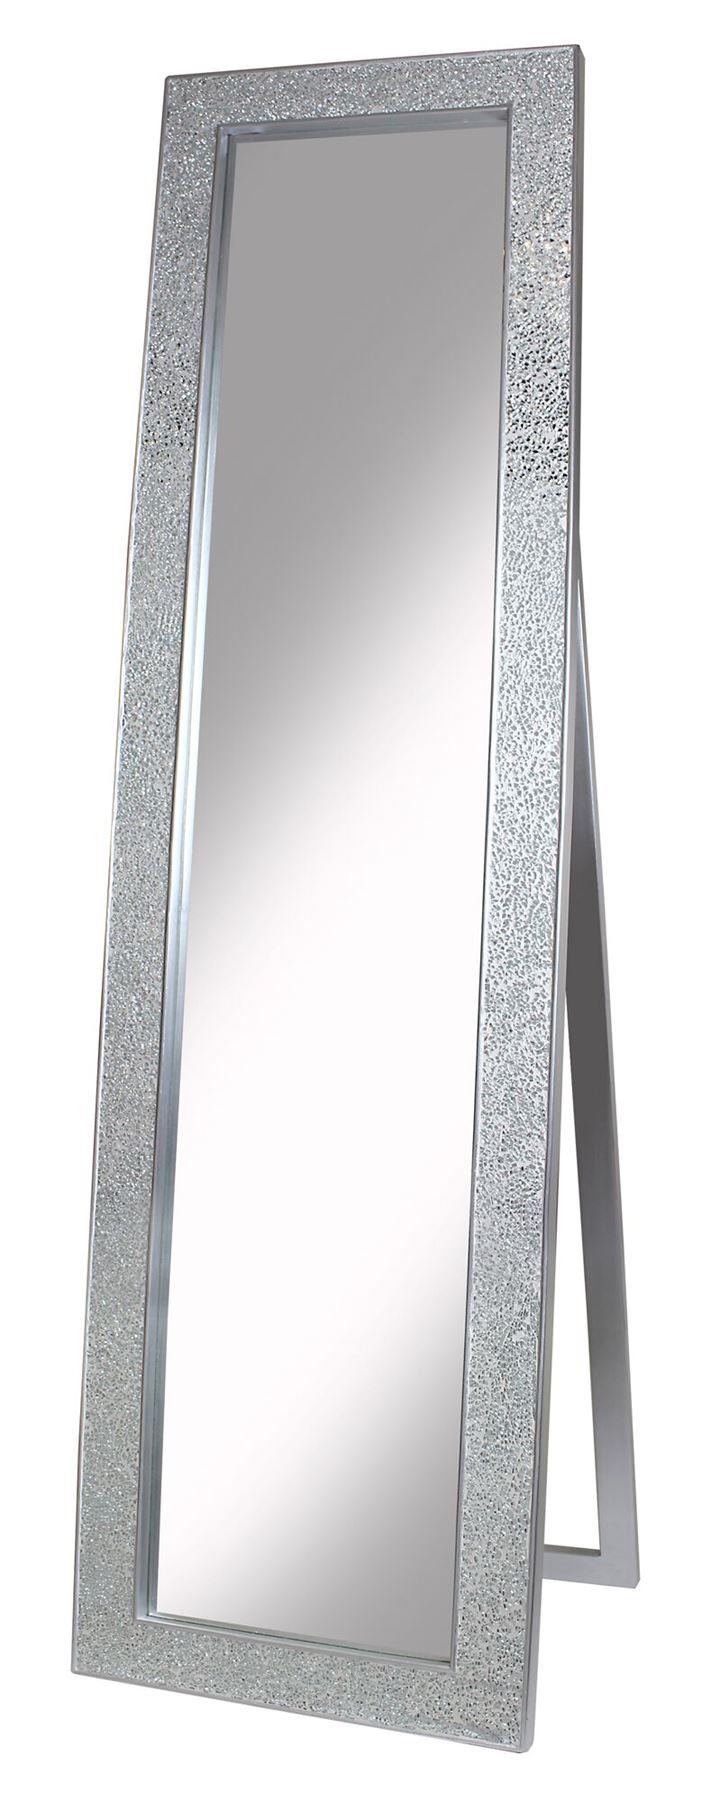 Mosaic Cheval Sparkle Mirror - Silver